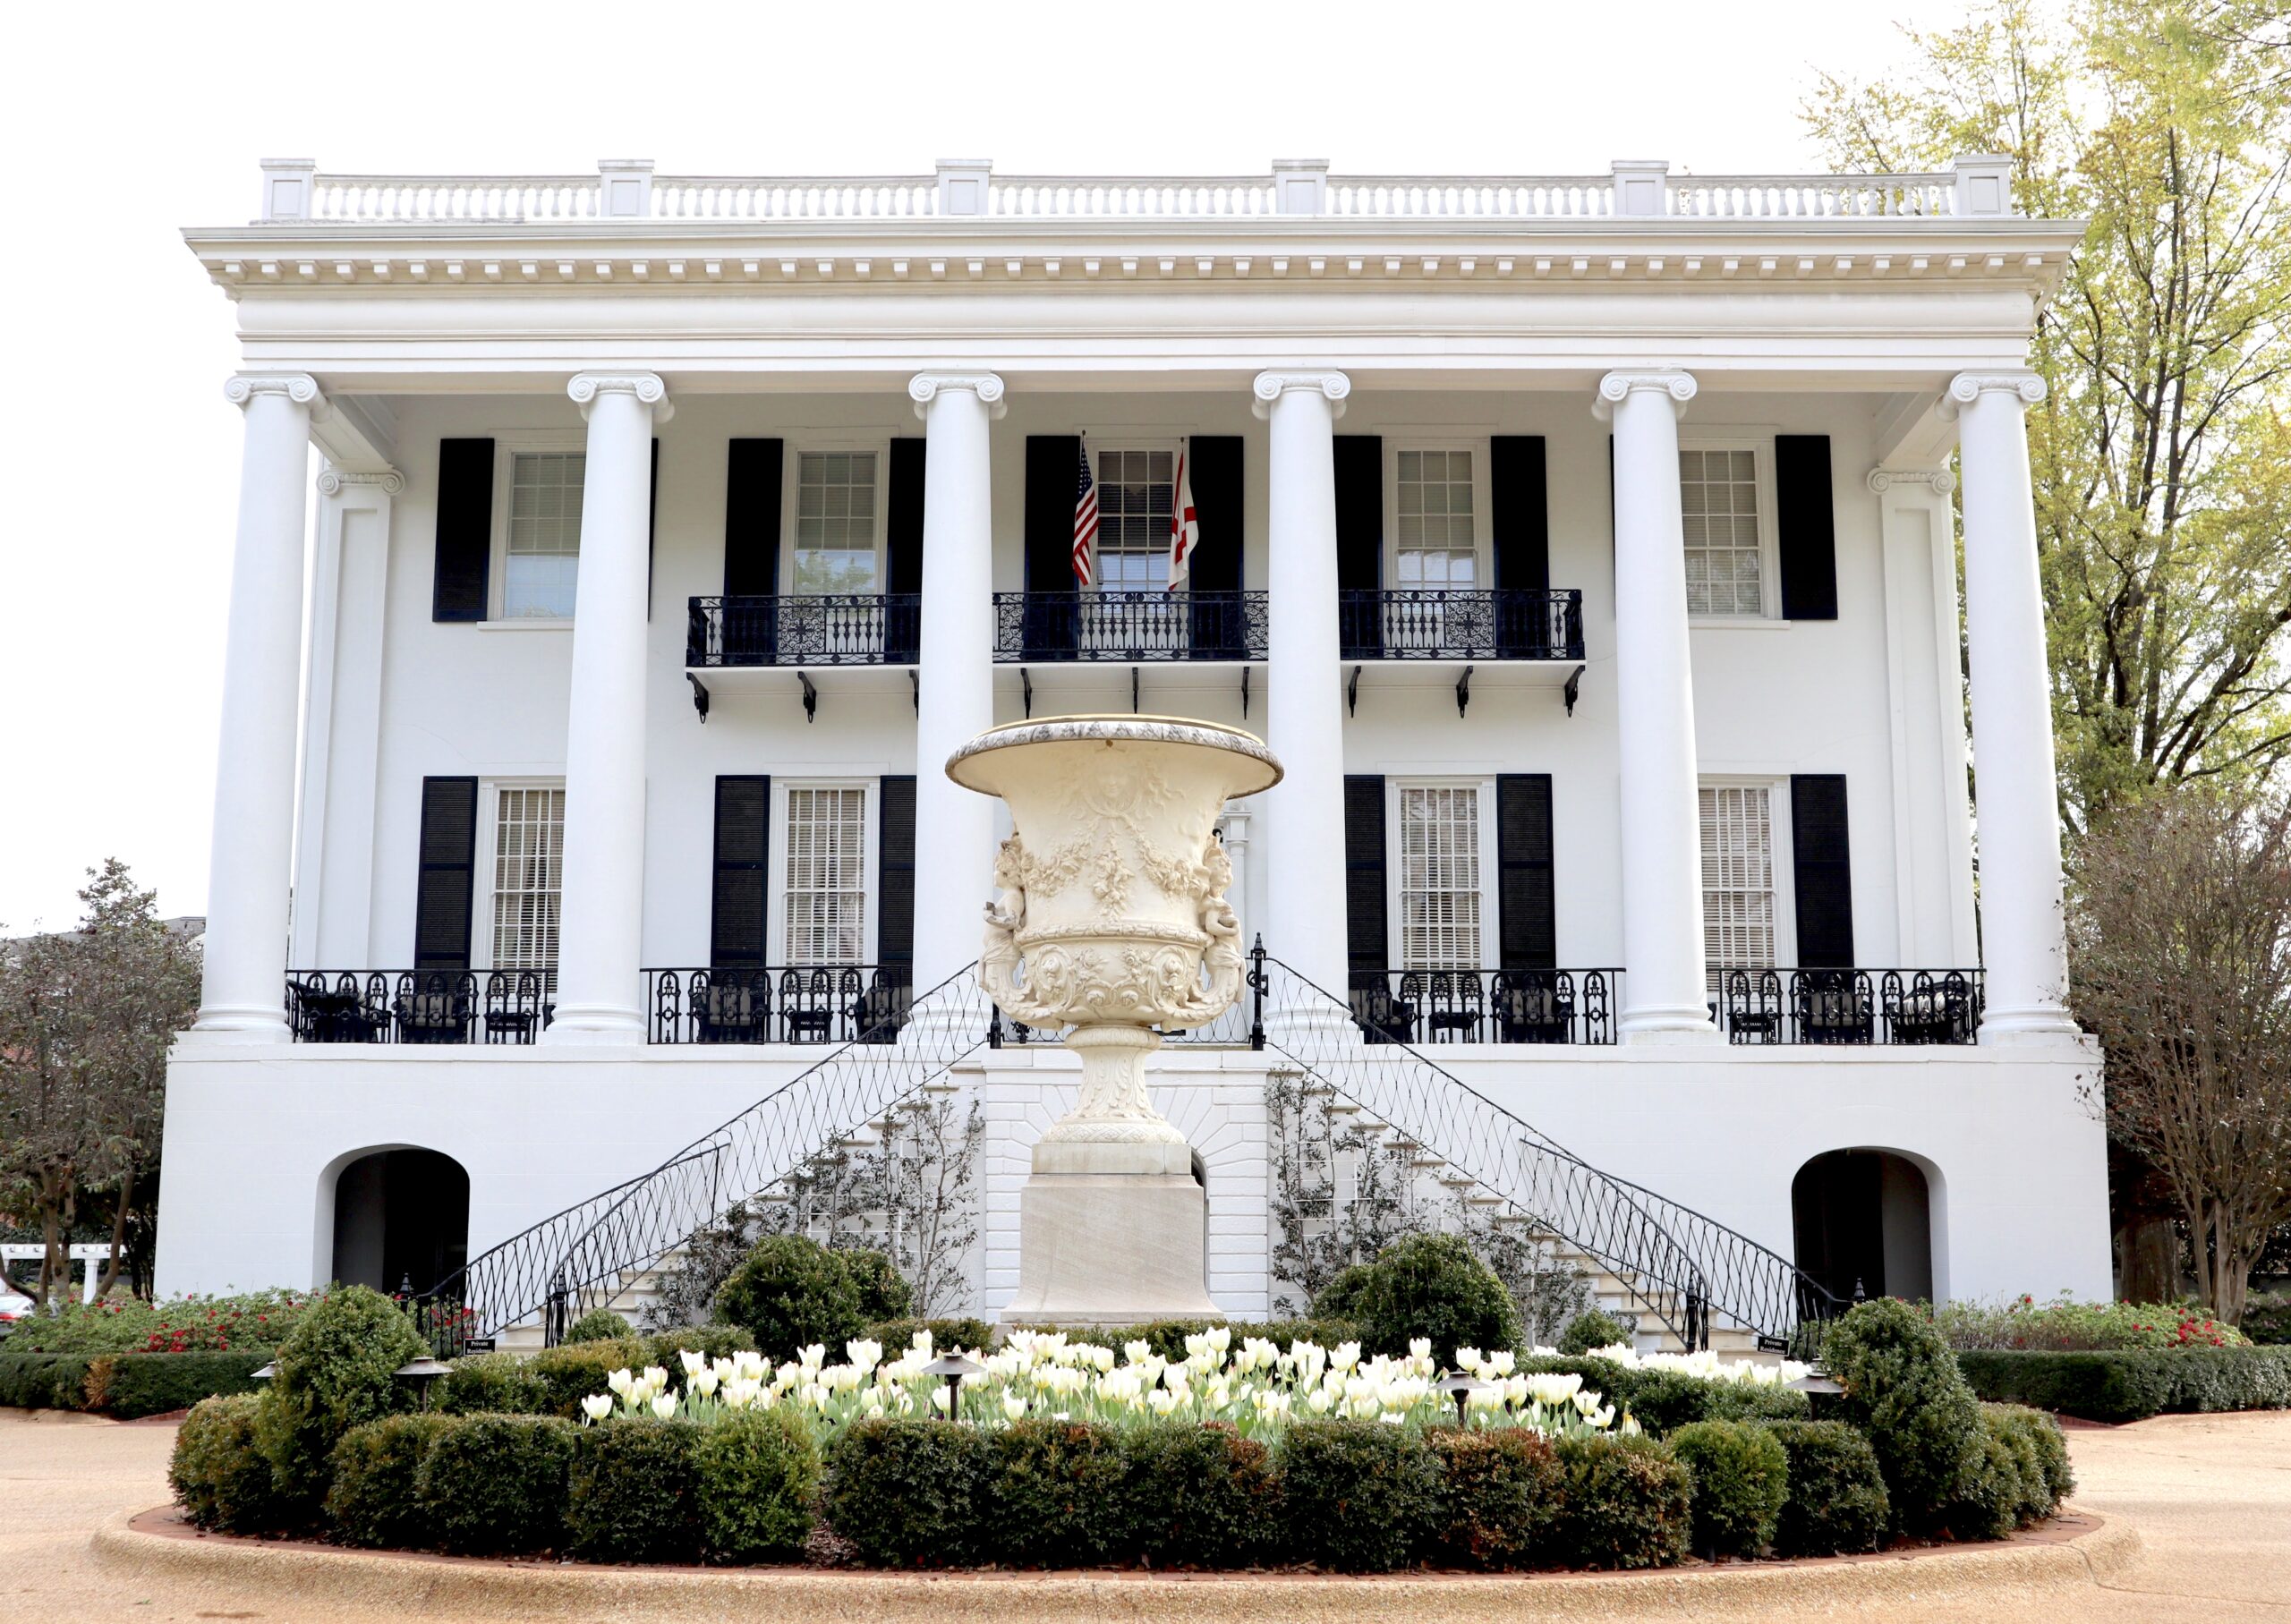 The University of Alabama's Presidents Mansion